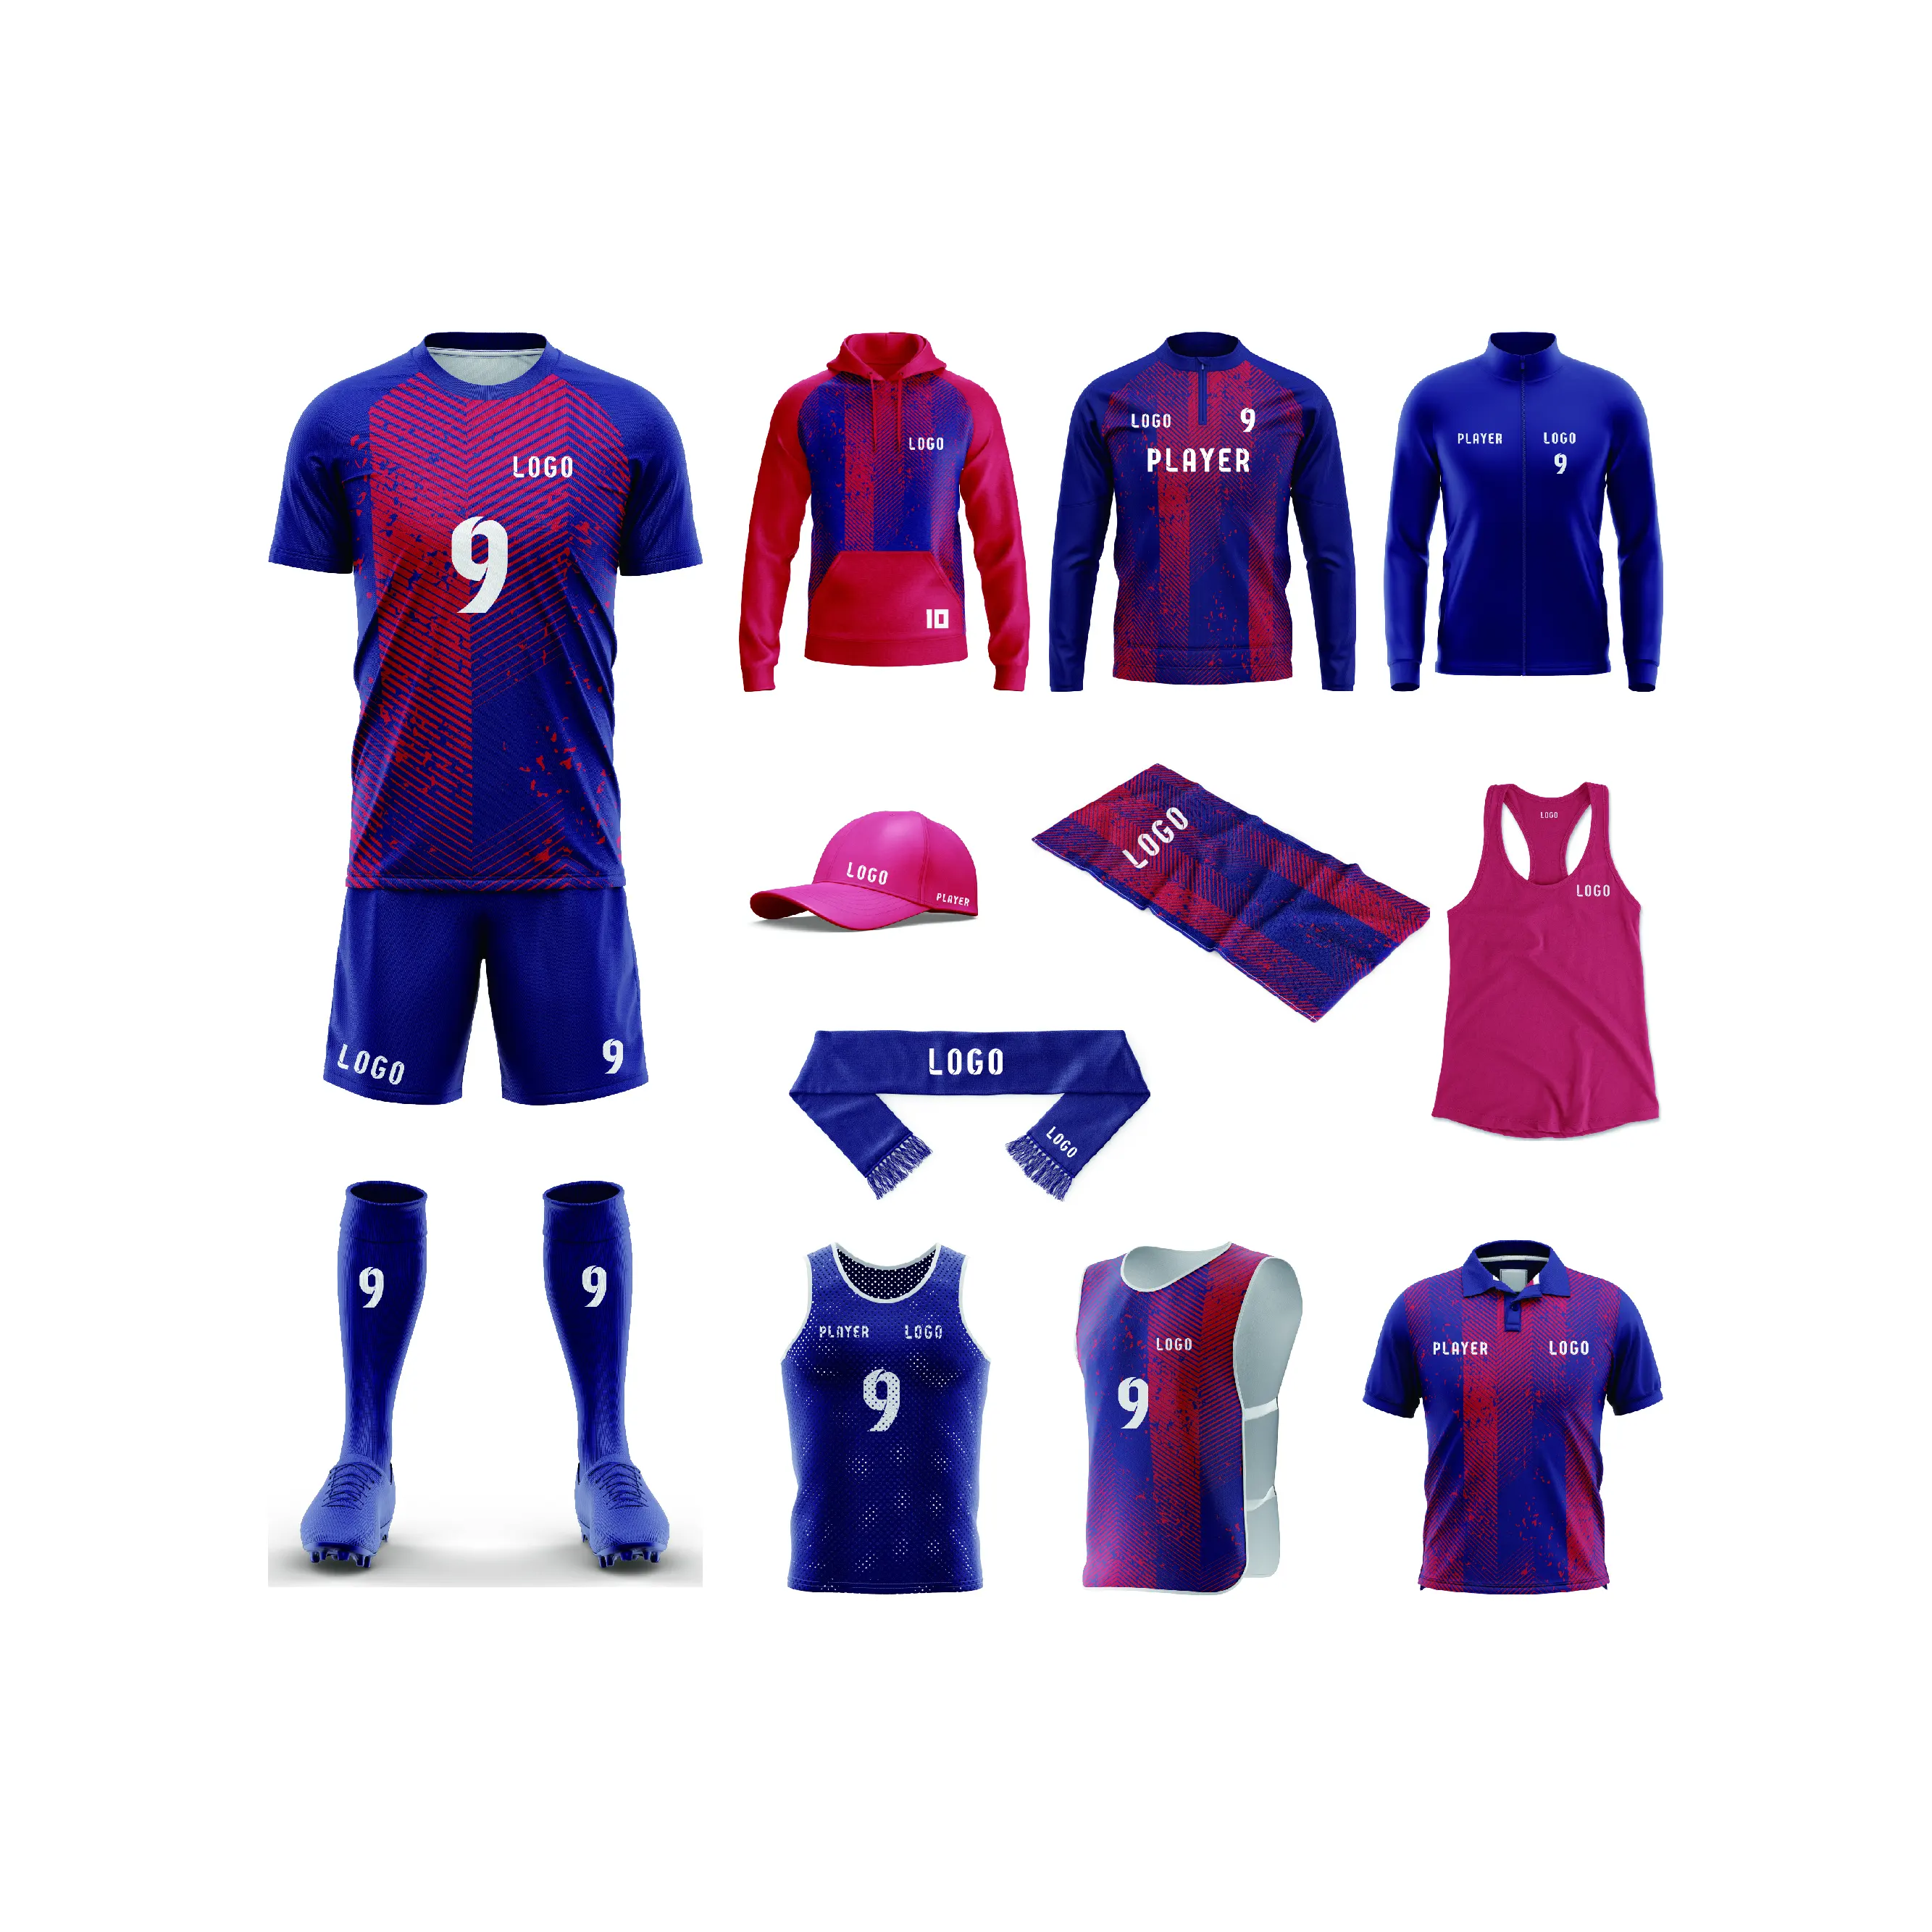 Roupas esportivas personalizadas de baixo custo, design de camisa de futebol, conjunto de camisa de futebol